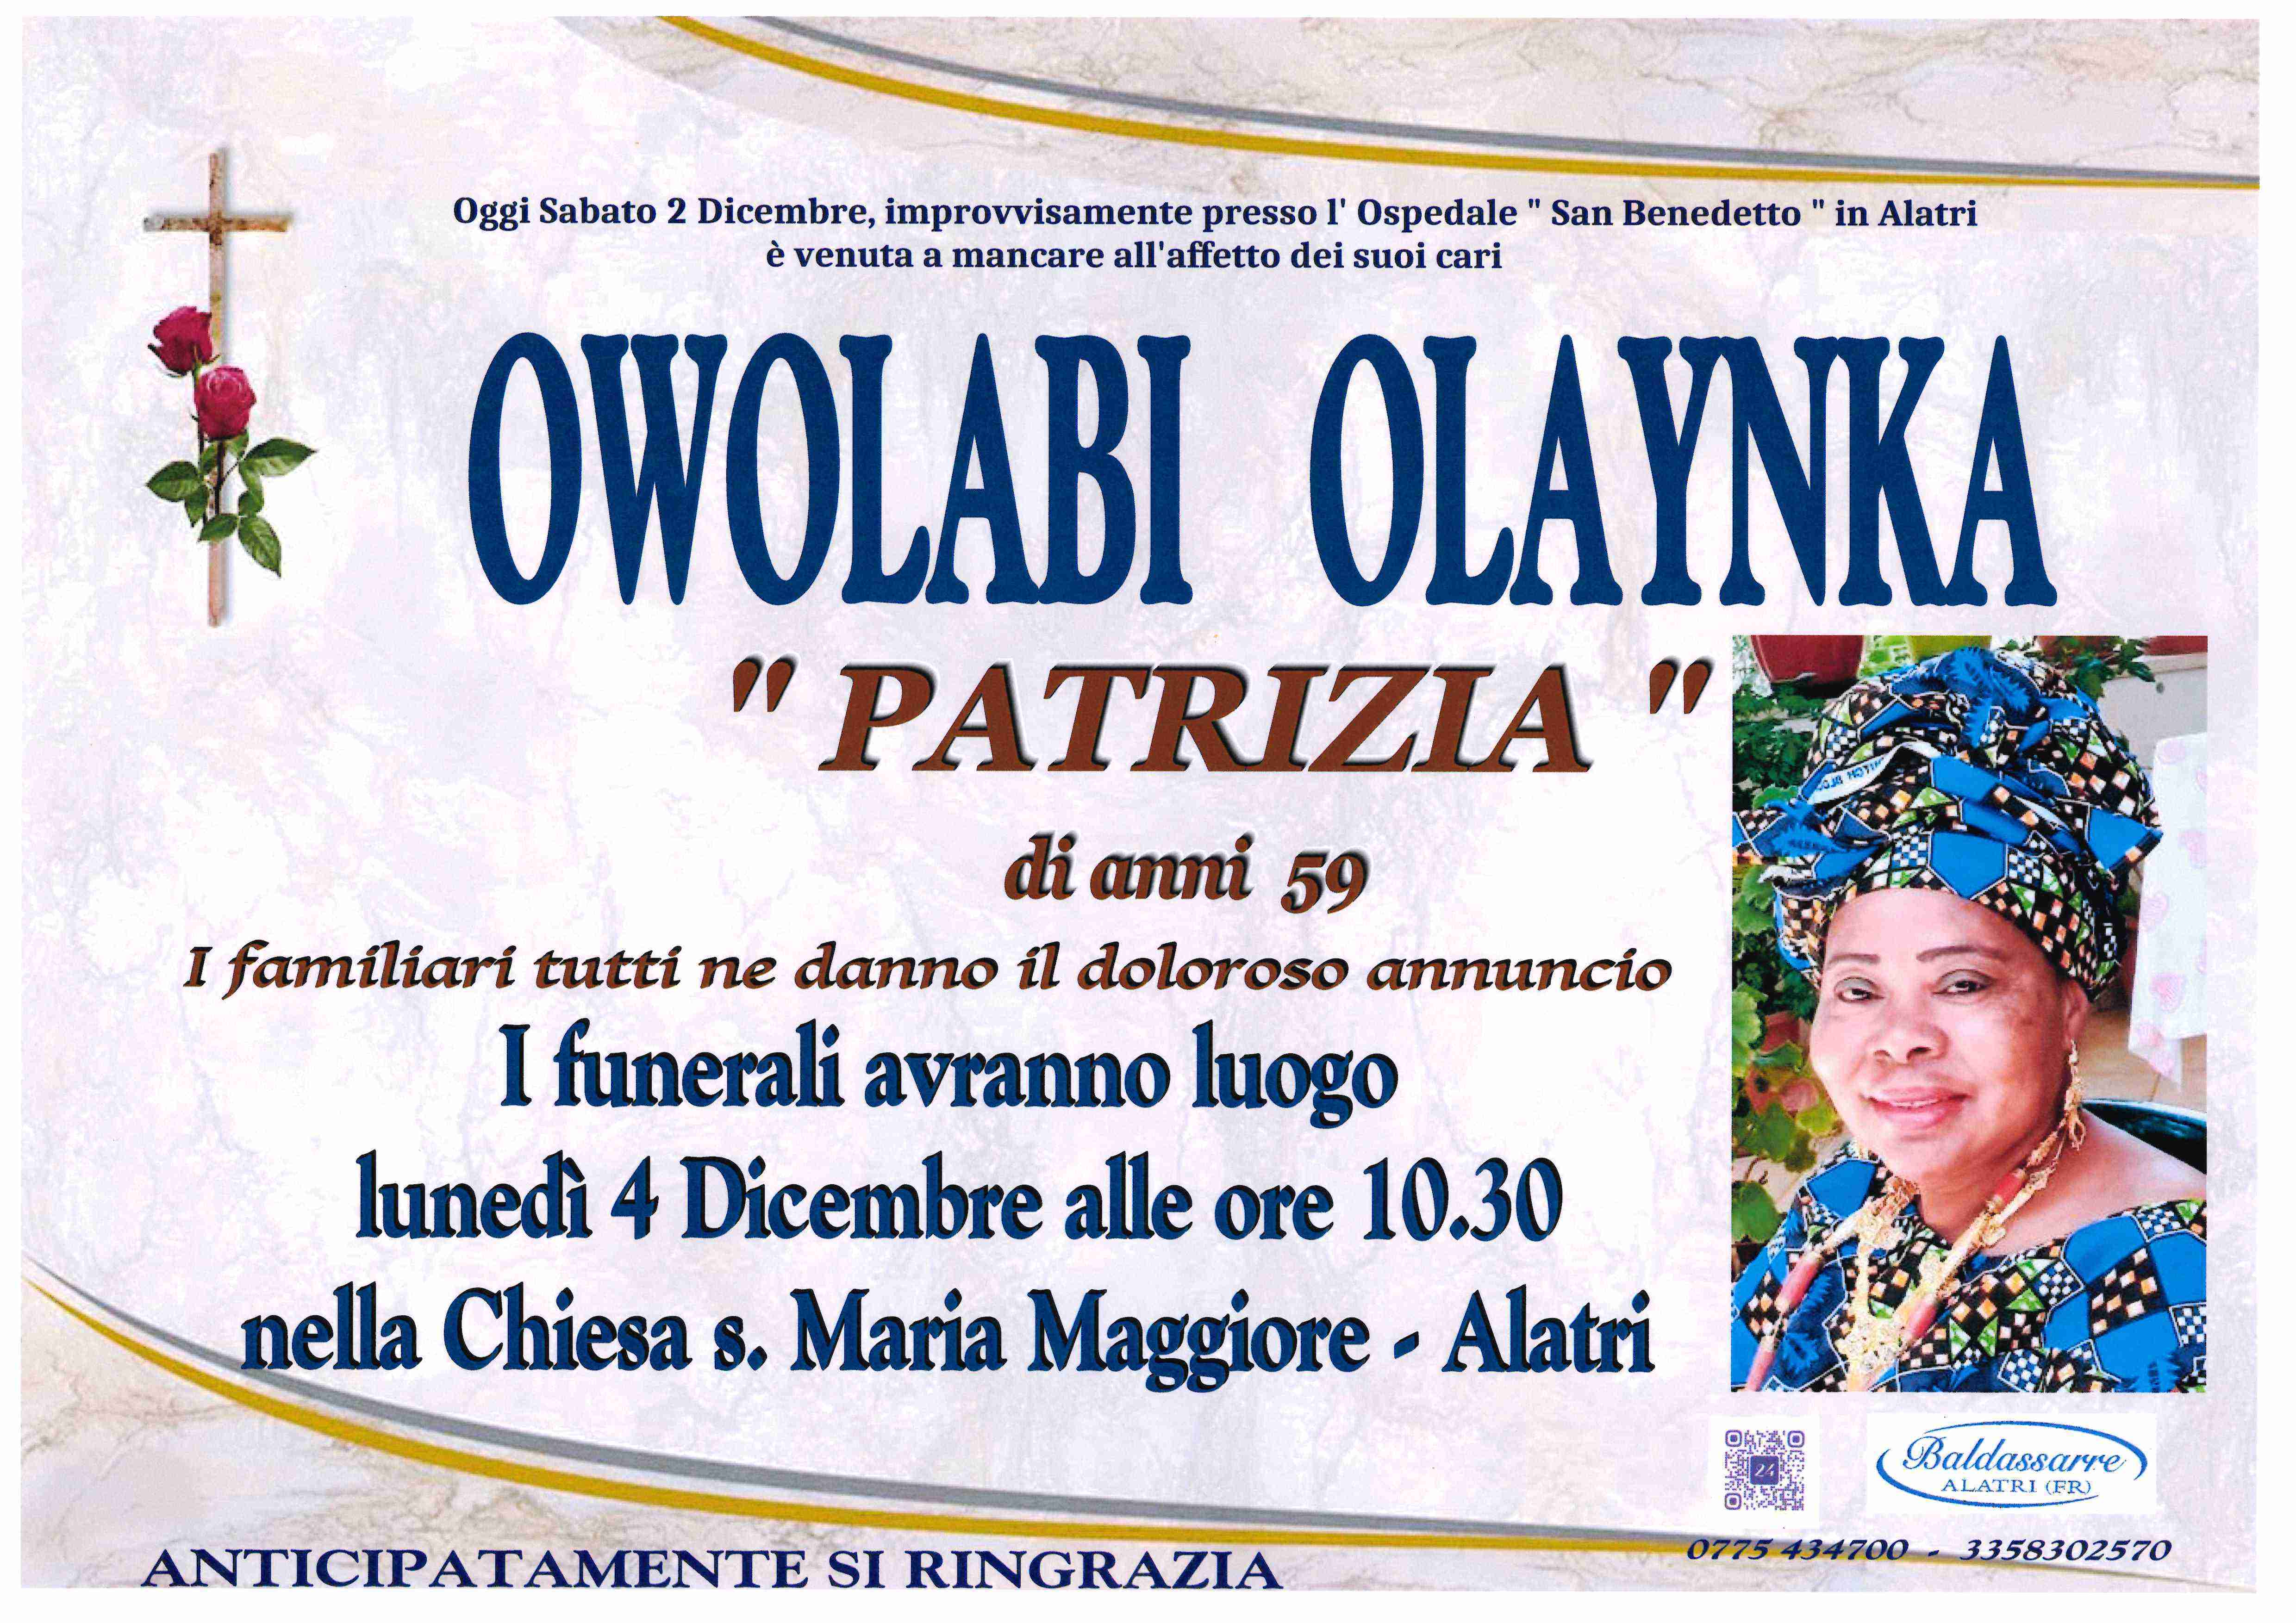 Olaynka Owolabi